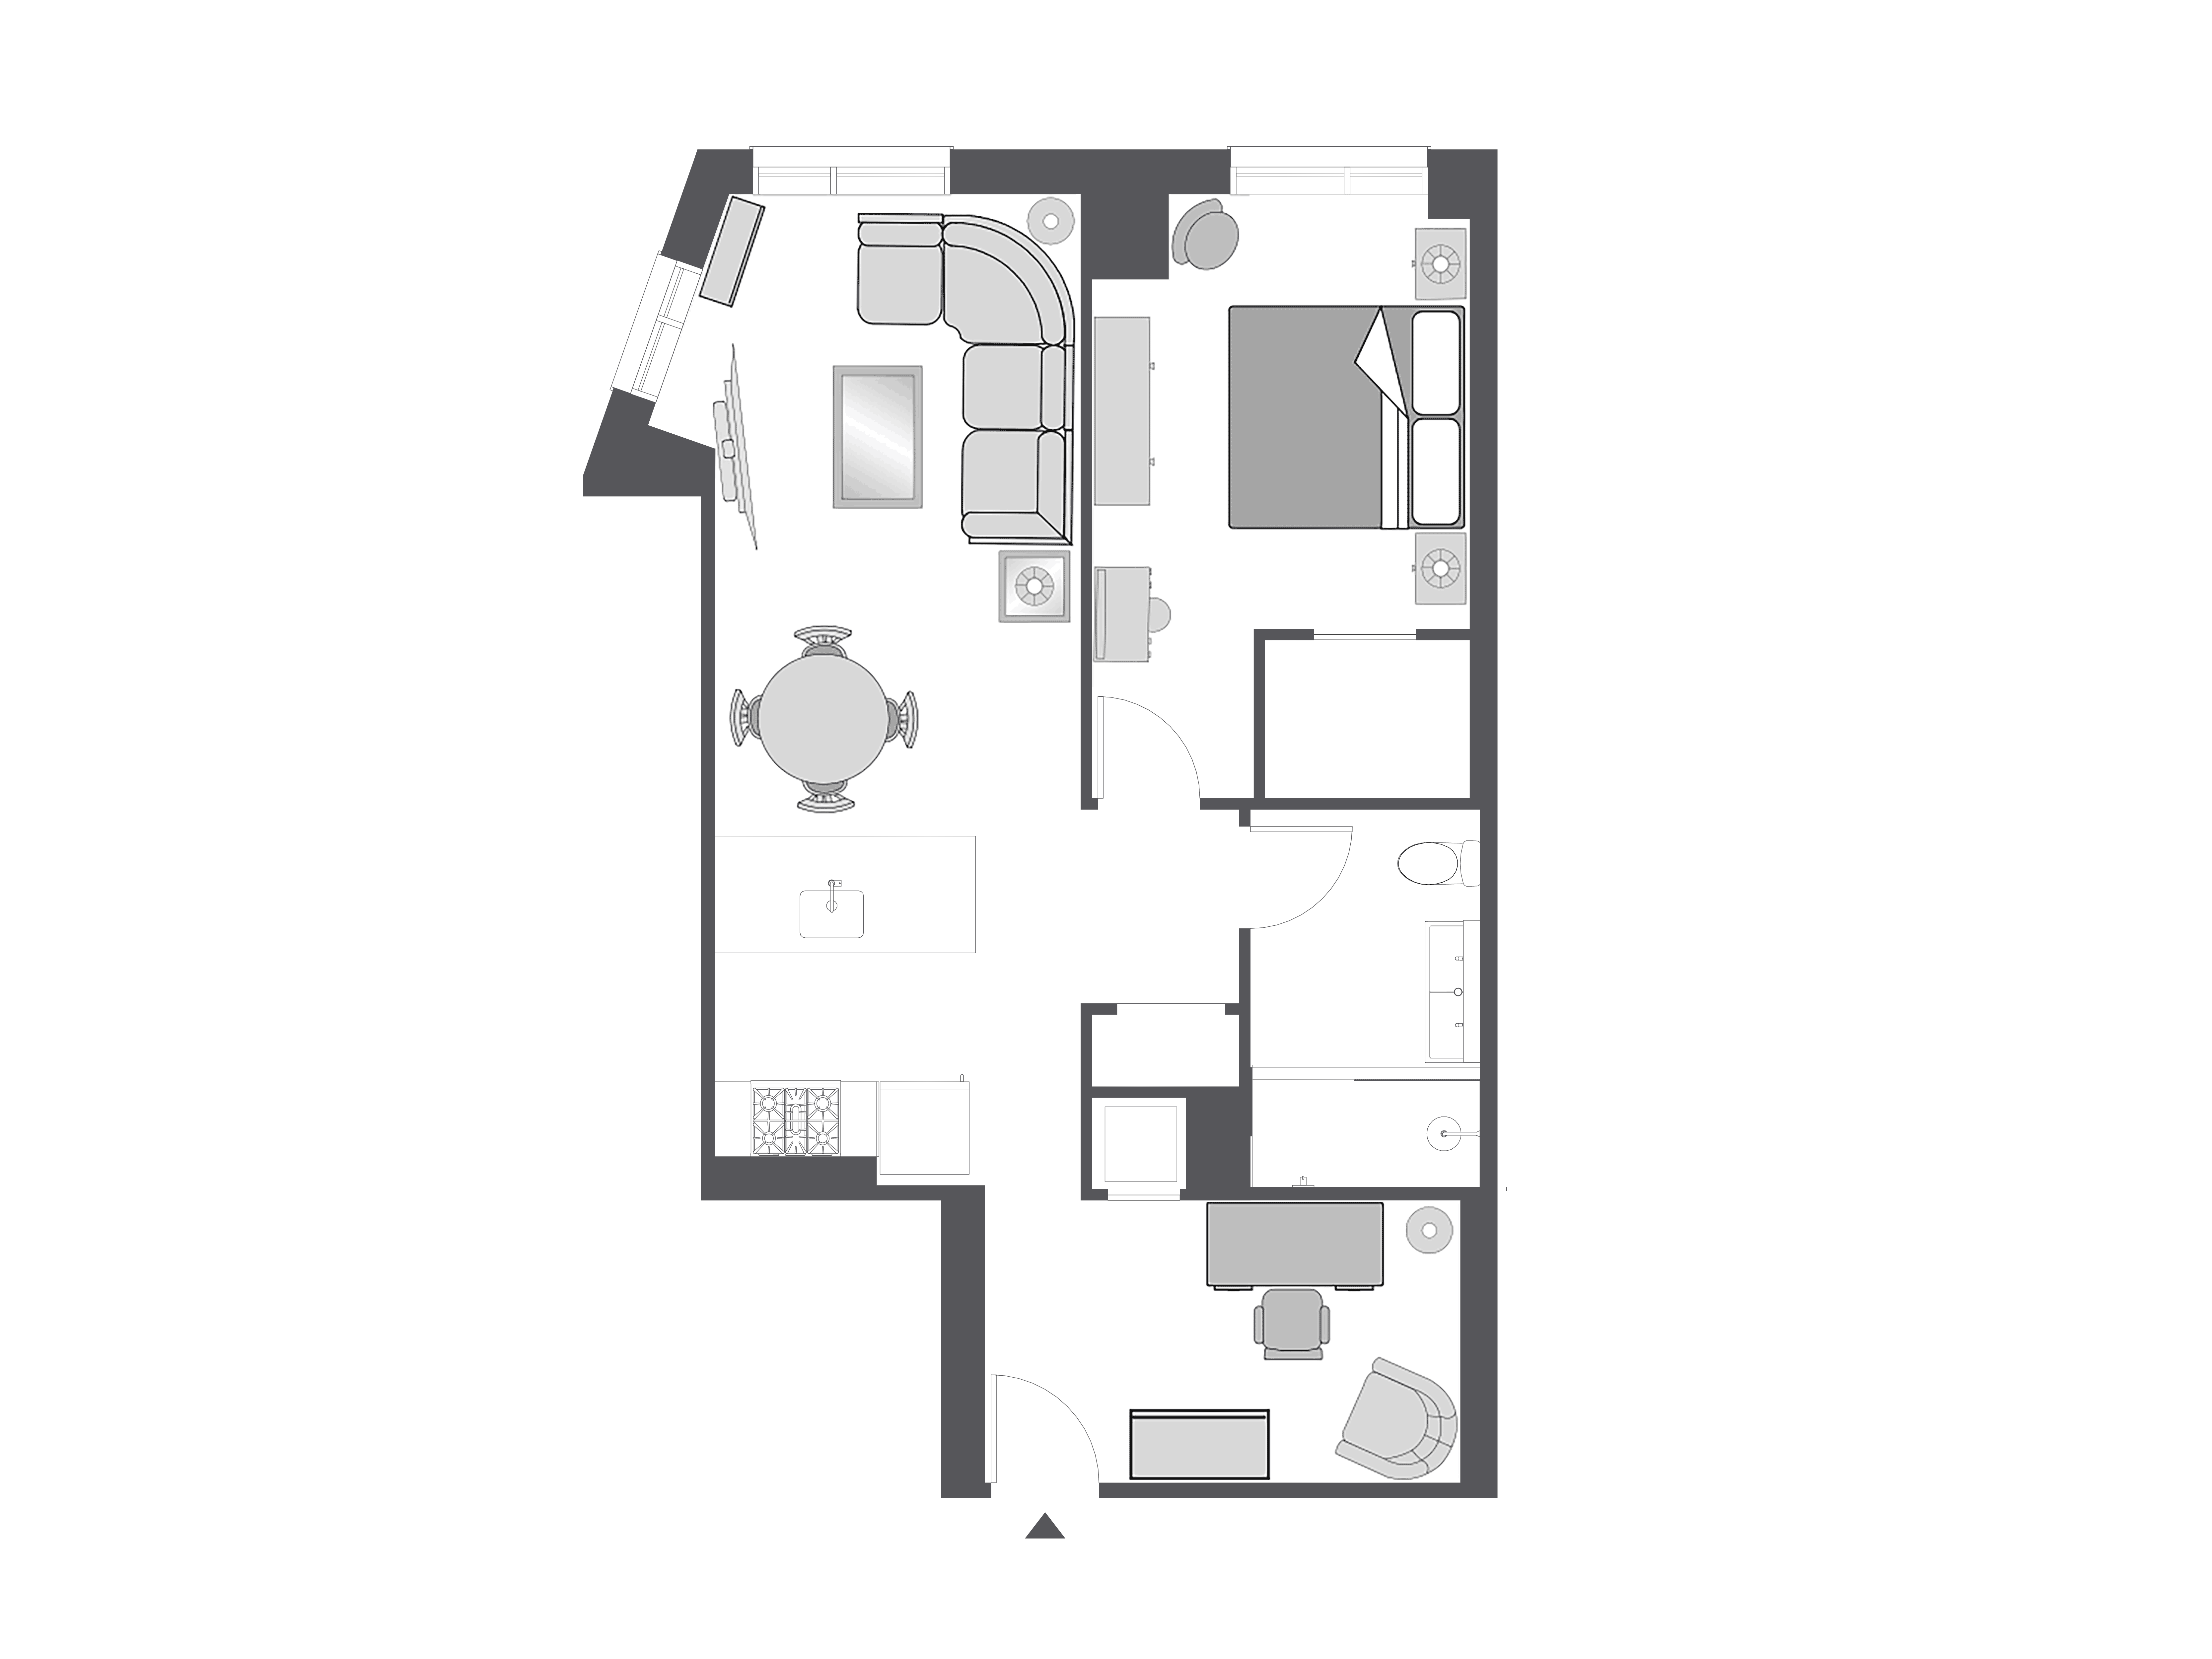 Floor plan with furniture